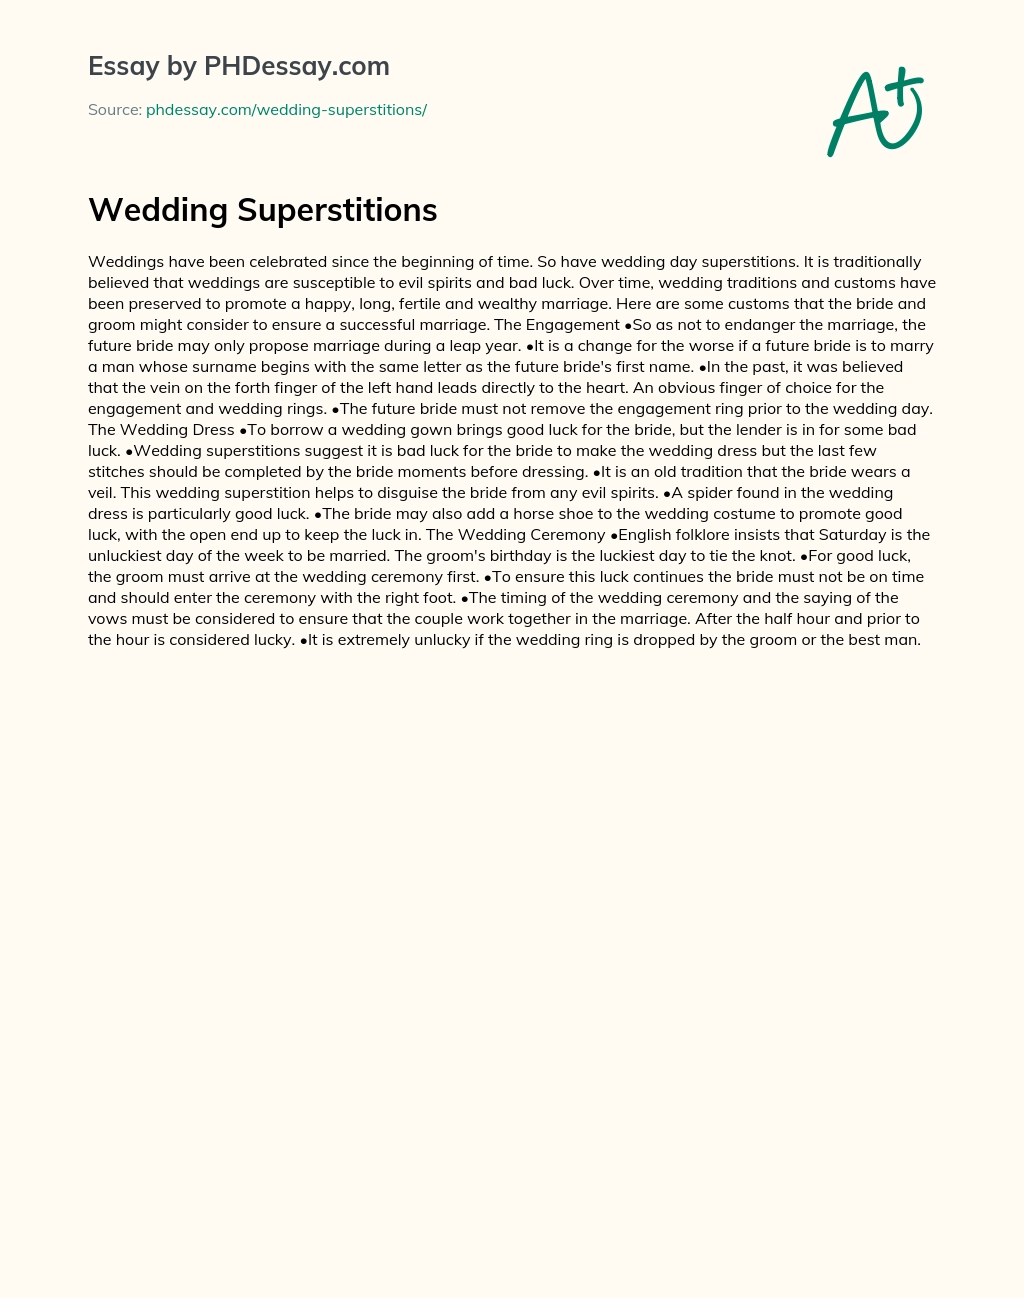 Wedding Superstitions essay